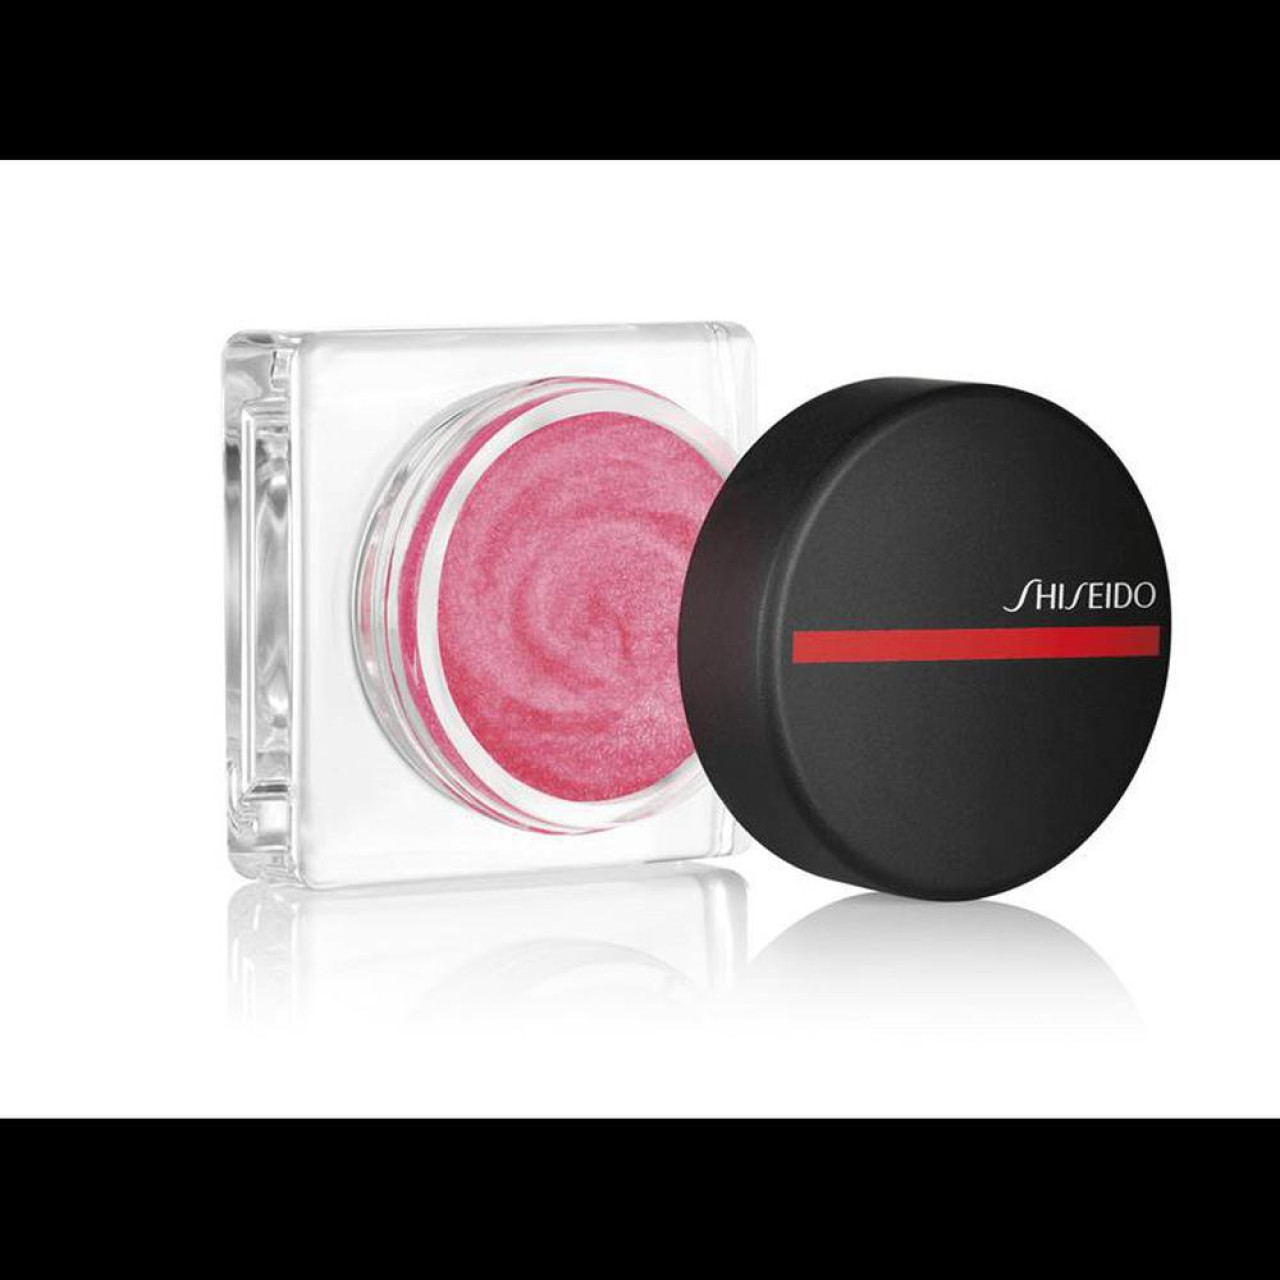 Shiseido minimalist whipped powder blush 02